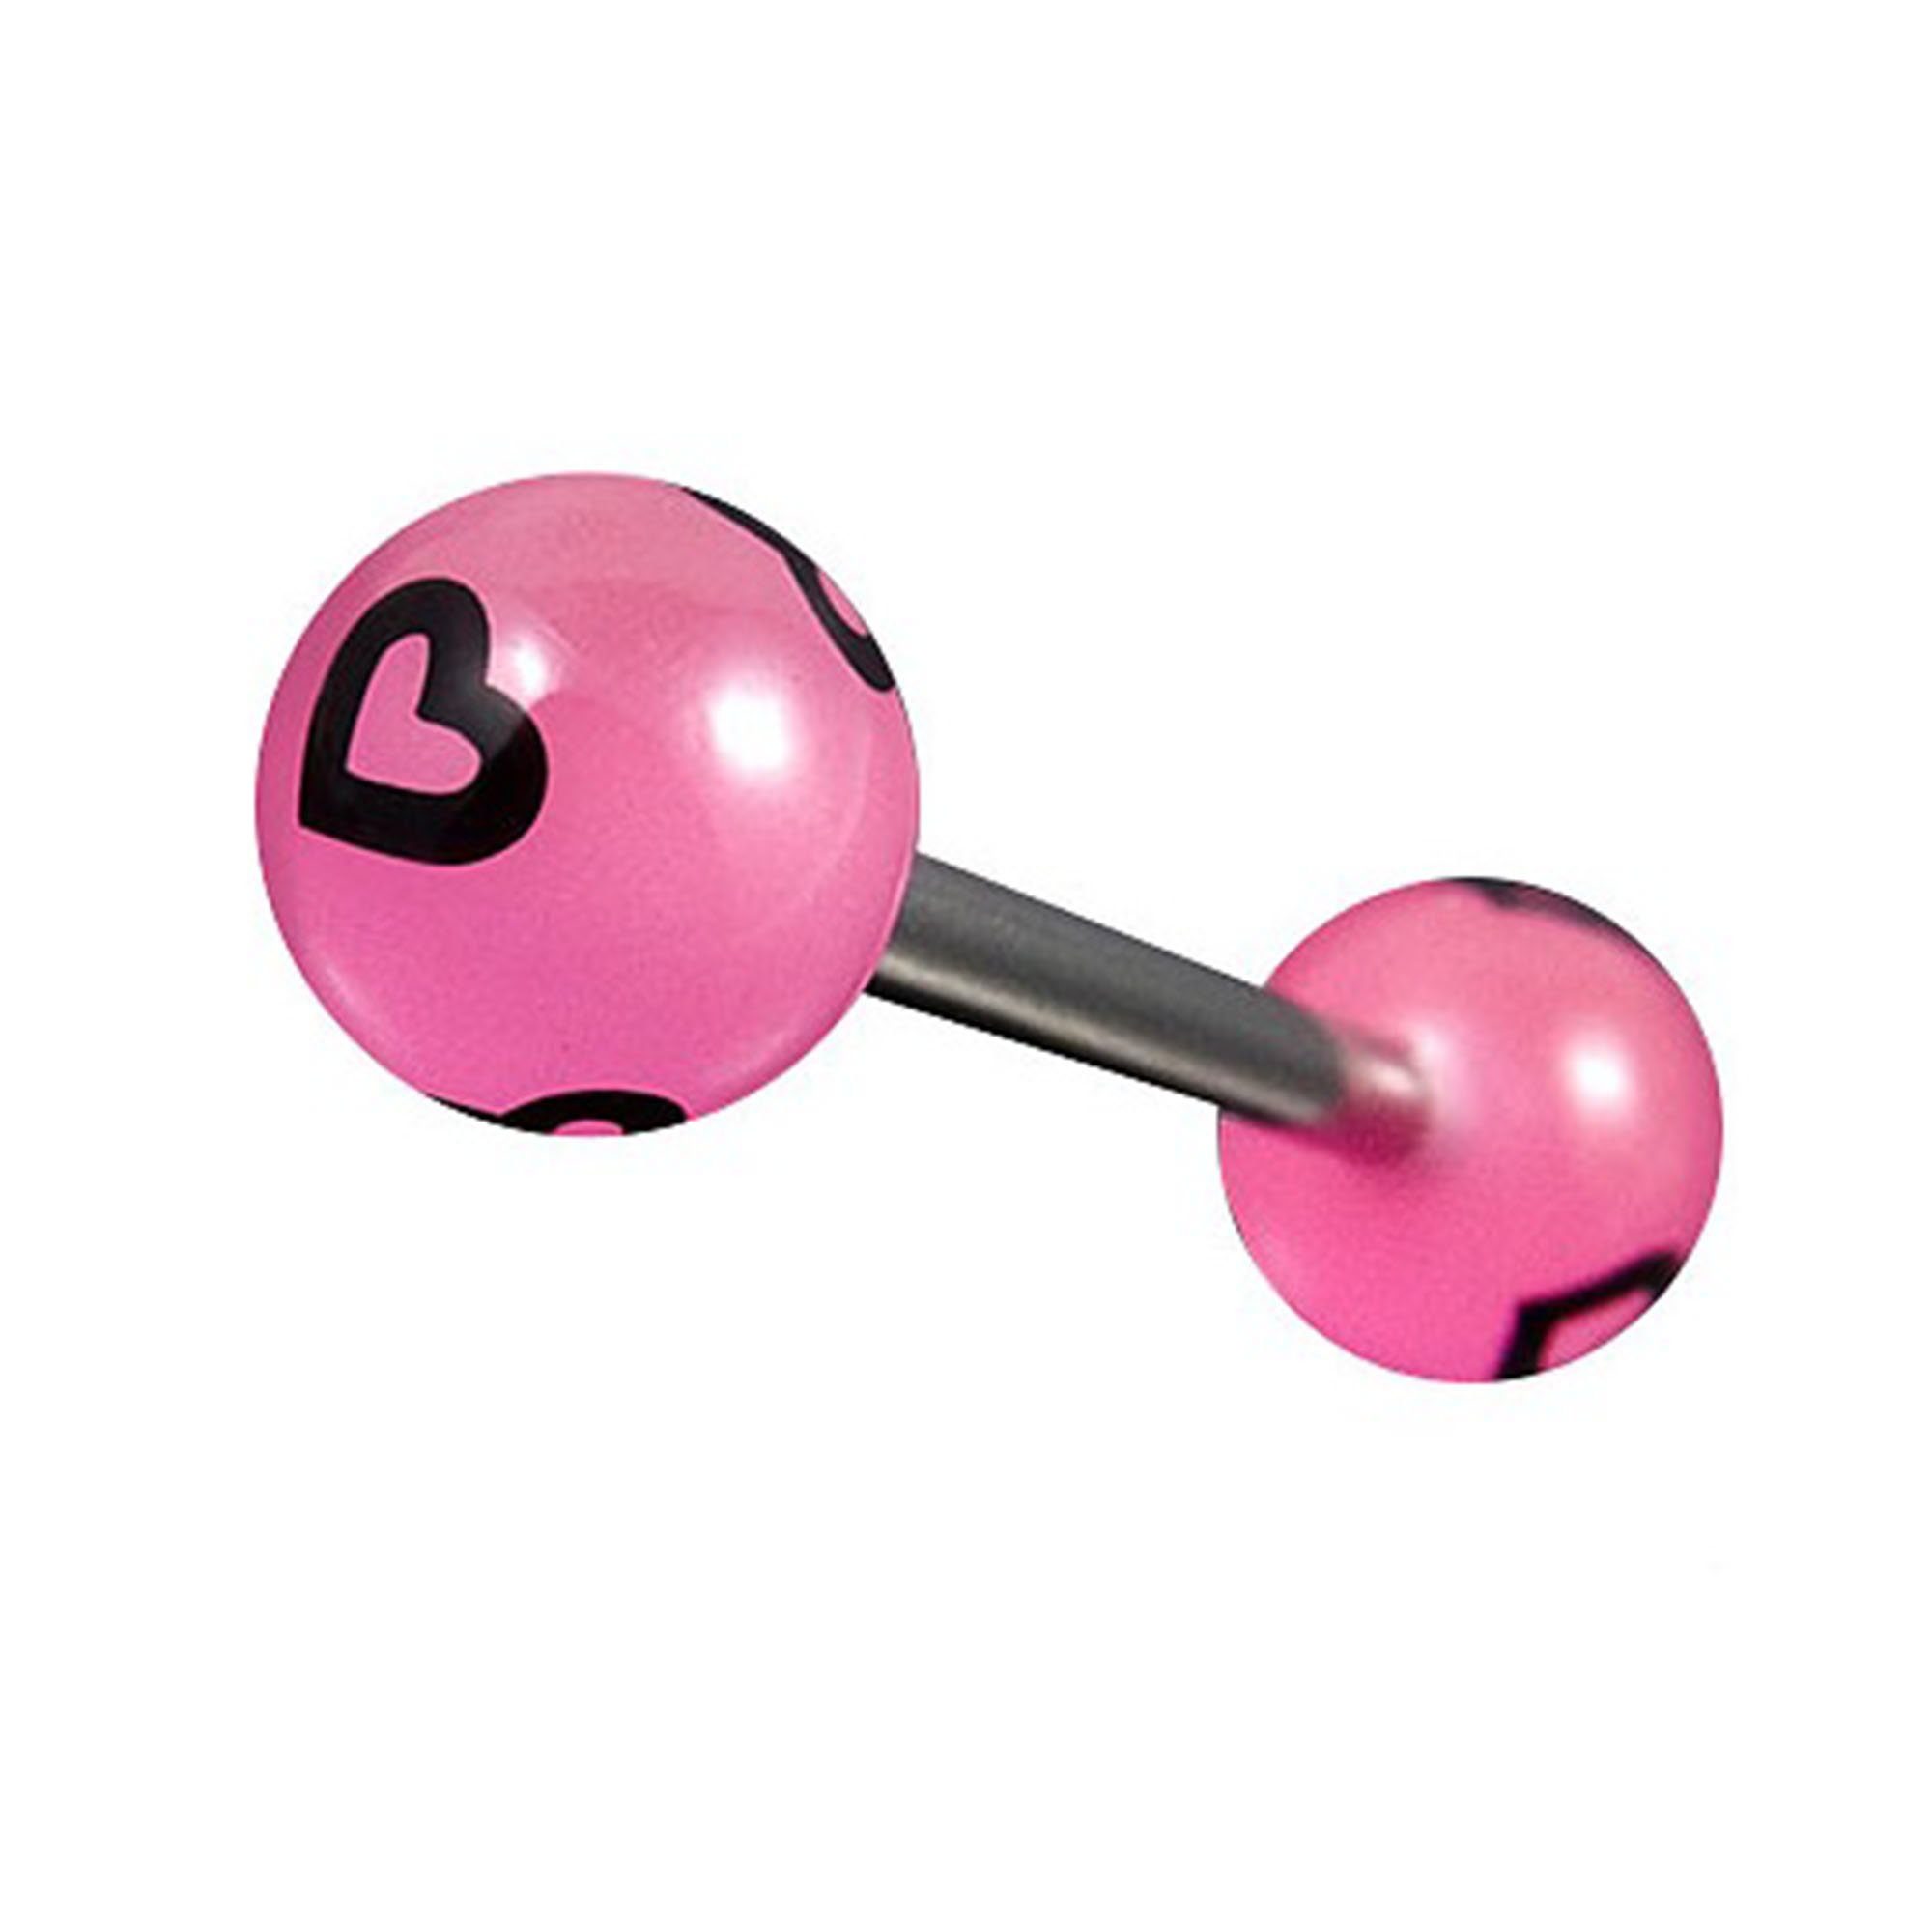 Taffstyle Piercing-Set Zungenpiercing Intim Brust Oral Kugel Ball Herz, Piercingfaktor Barbell Stab Hantel Stecker Ohr Tragus Helix Kugel Logo Pink